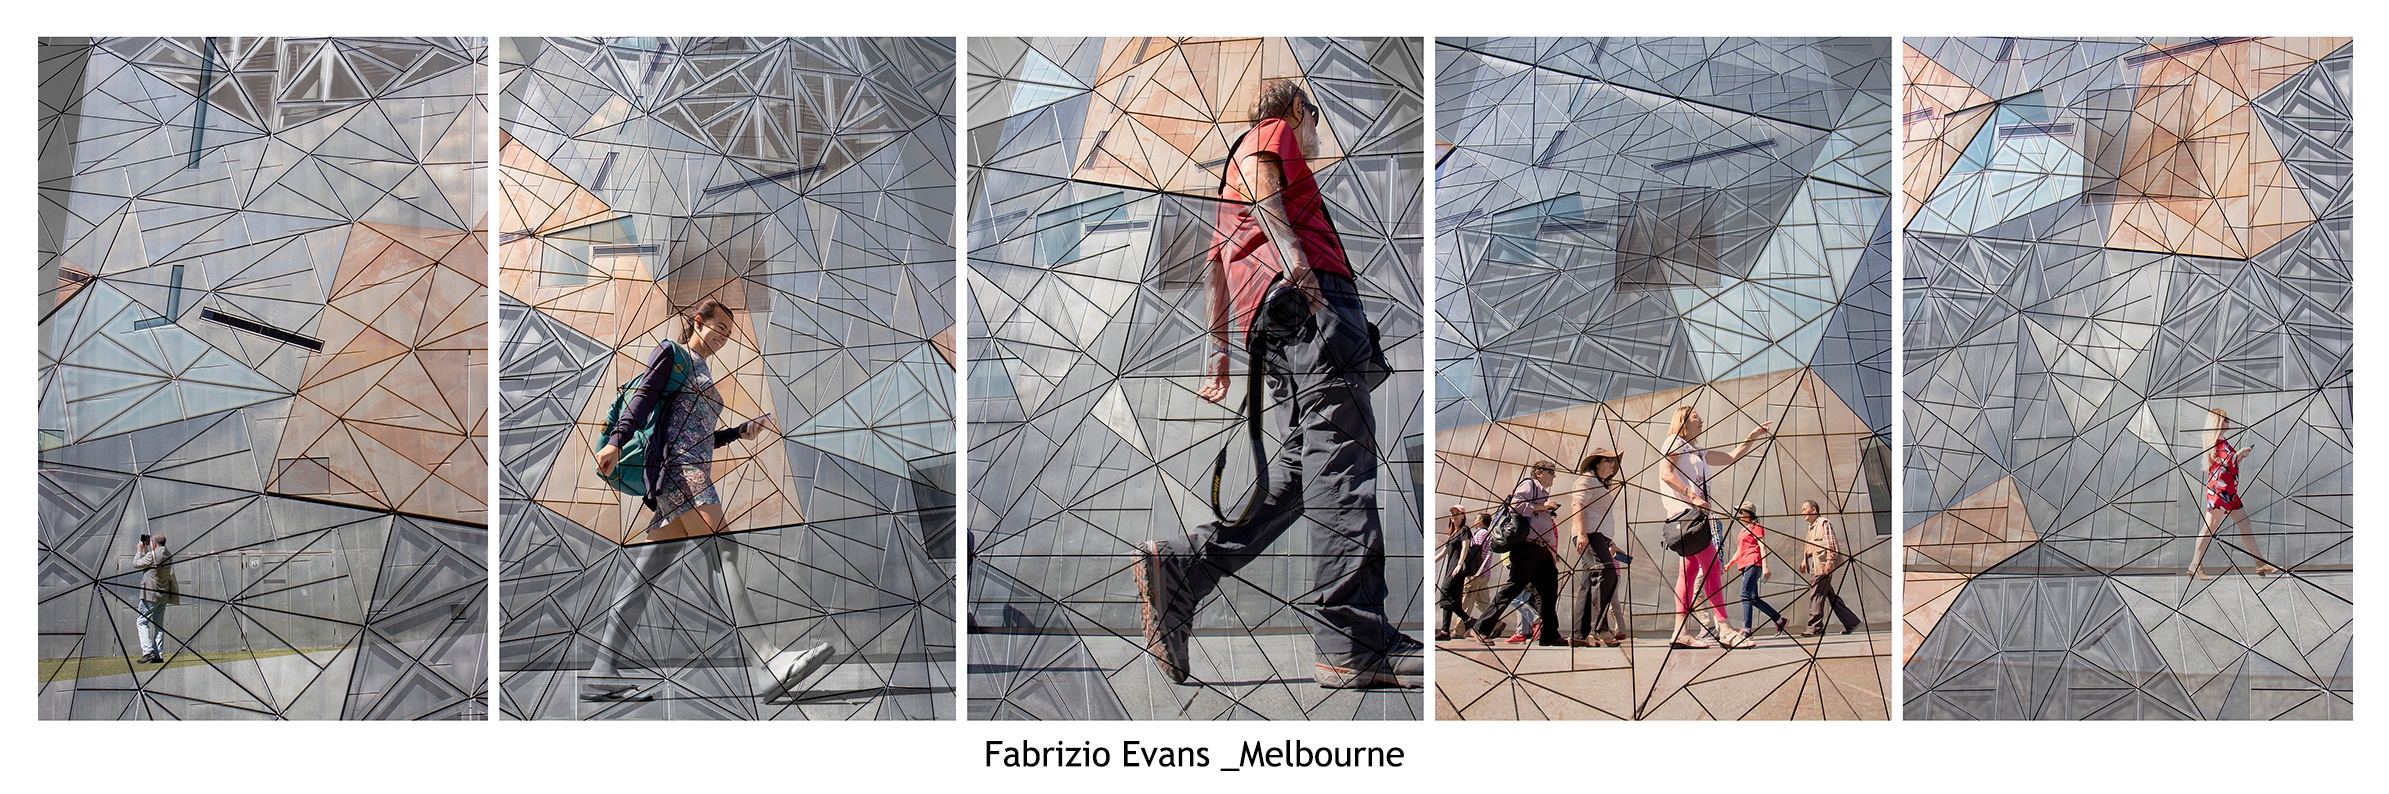 Melbourne-Fabrizio Evans